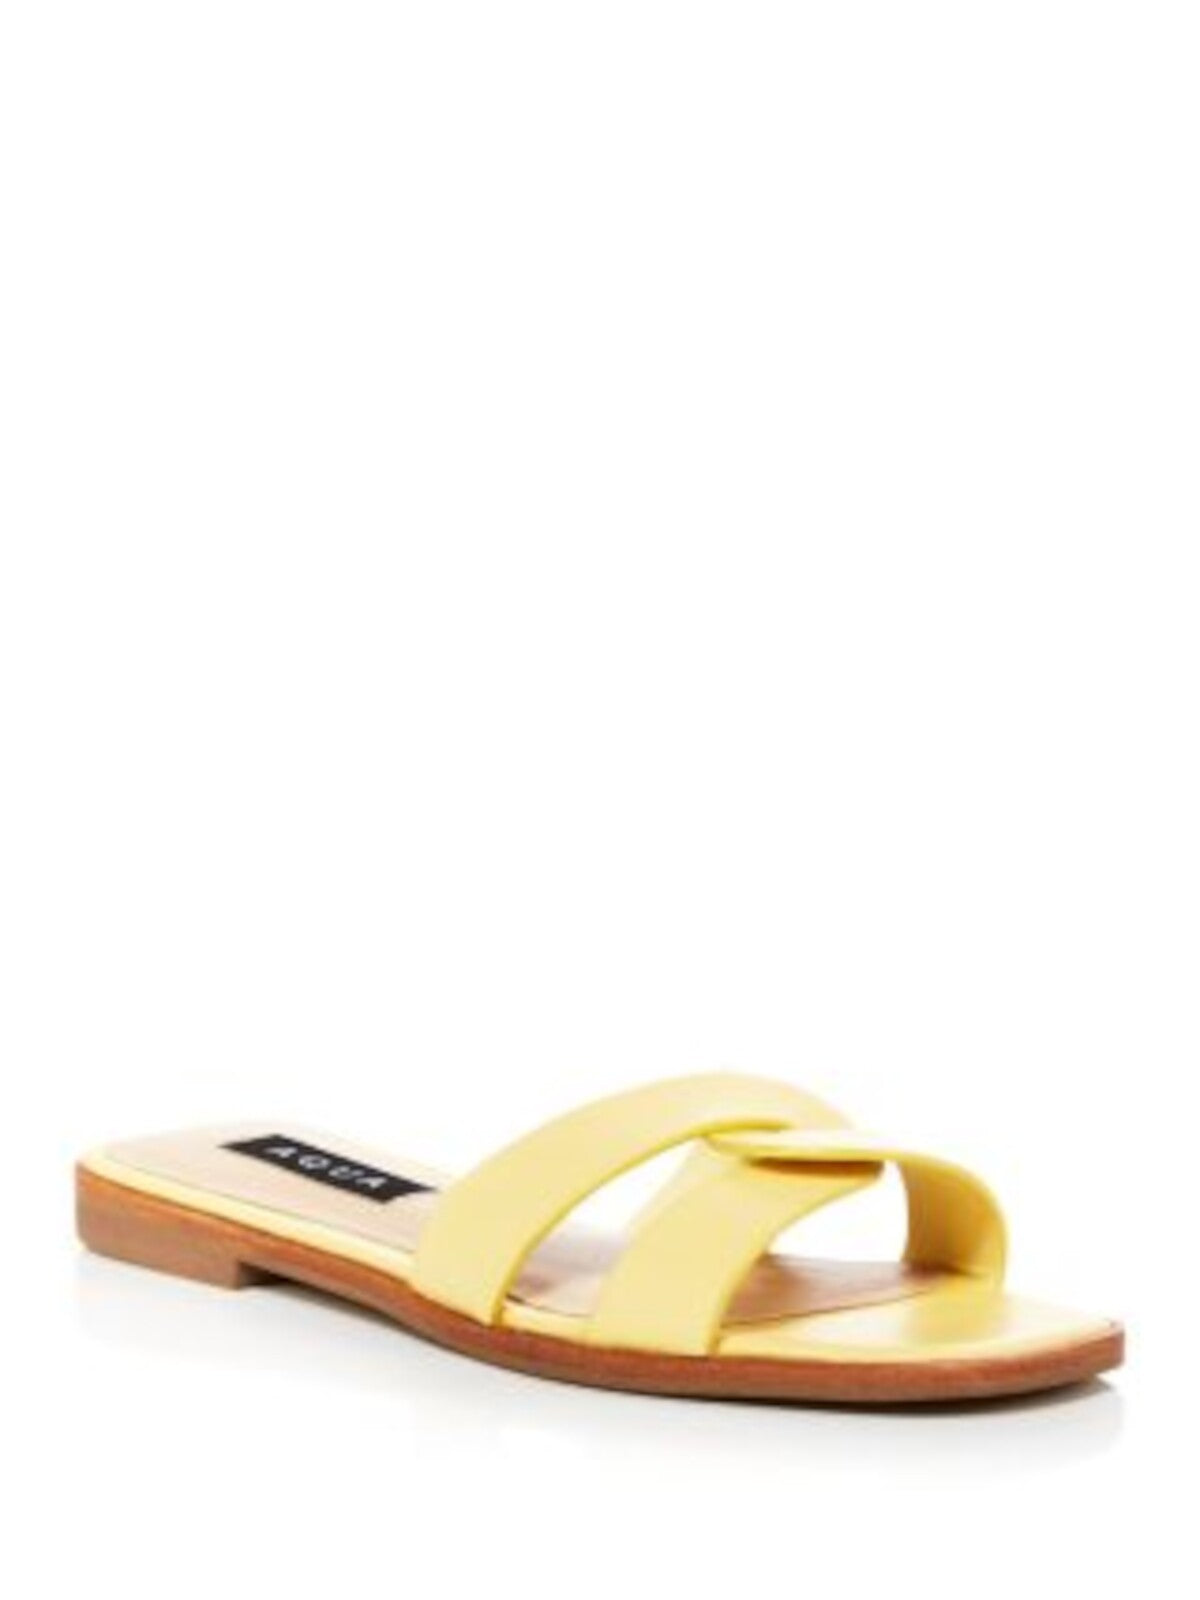 AQUA Womens Yellow Cross Padded Kelly Square Toe Slip On Leather Slide Sandals Shoes 8.5 M